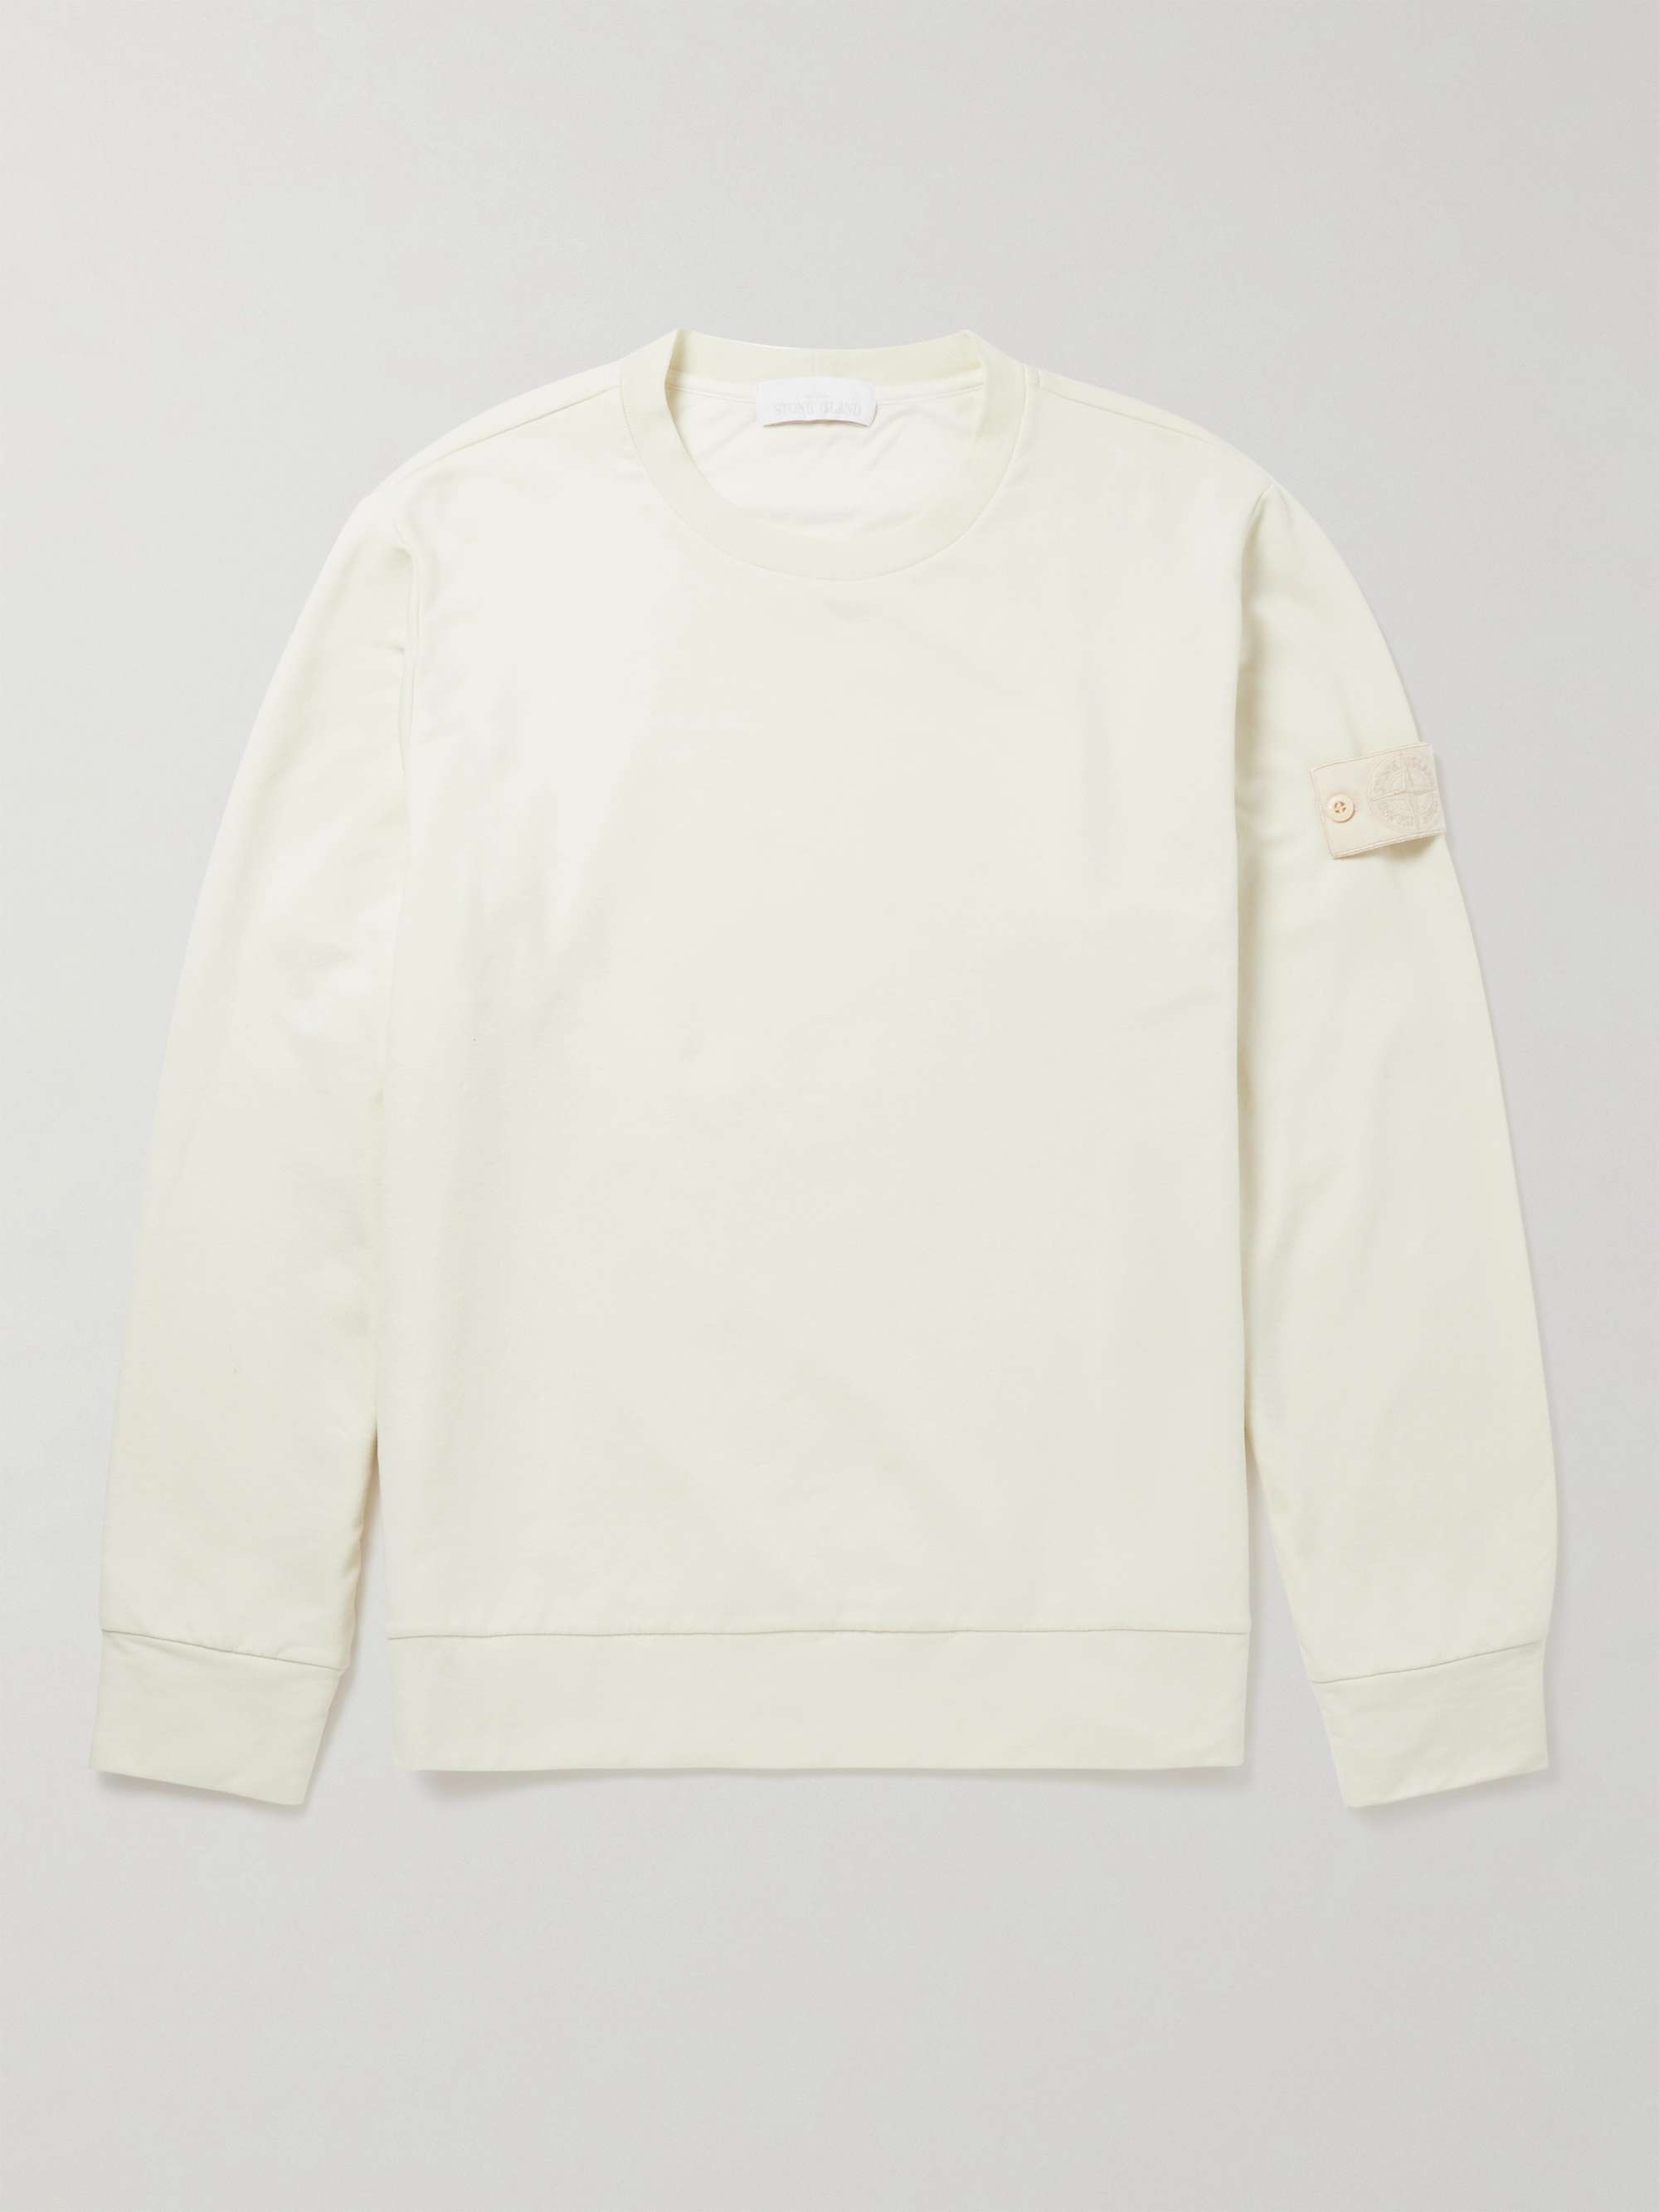 STONE ISLAND Logo-Appliquéd Cotton-Blend Jersey Sweatshirt